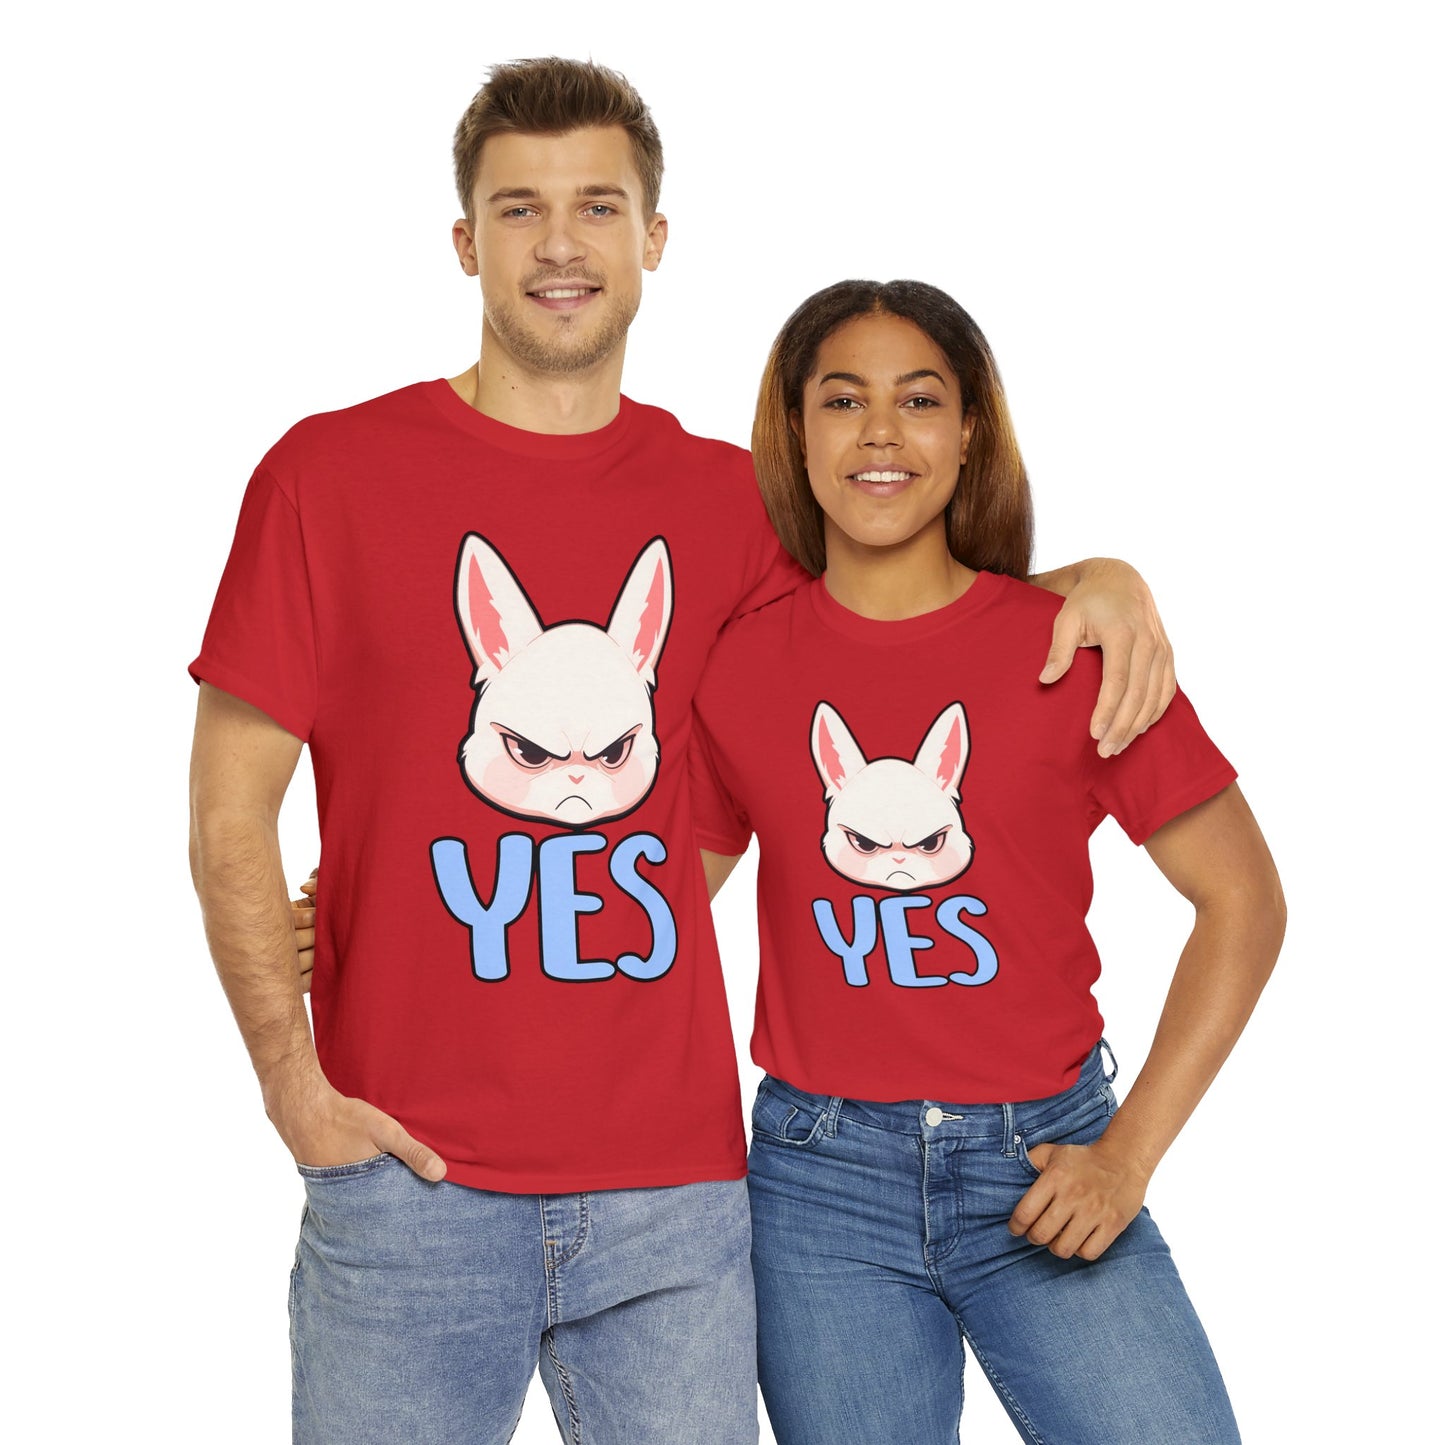 Yes Cute Annoyed Rabbit Black Outline Unisex Cotton Shirt